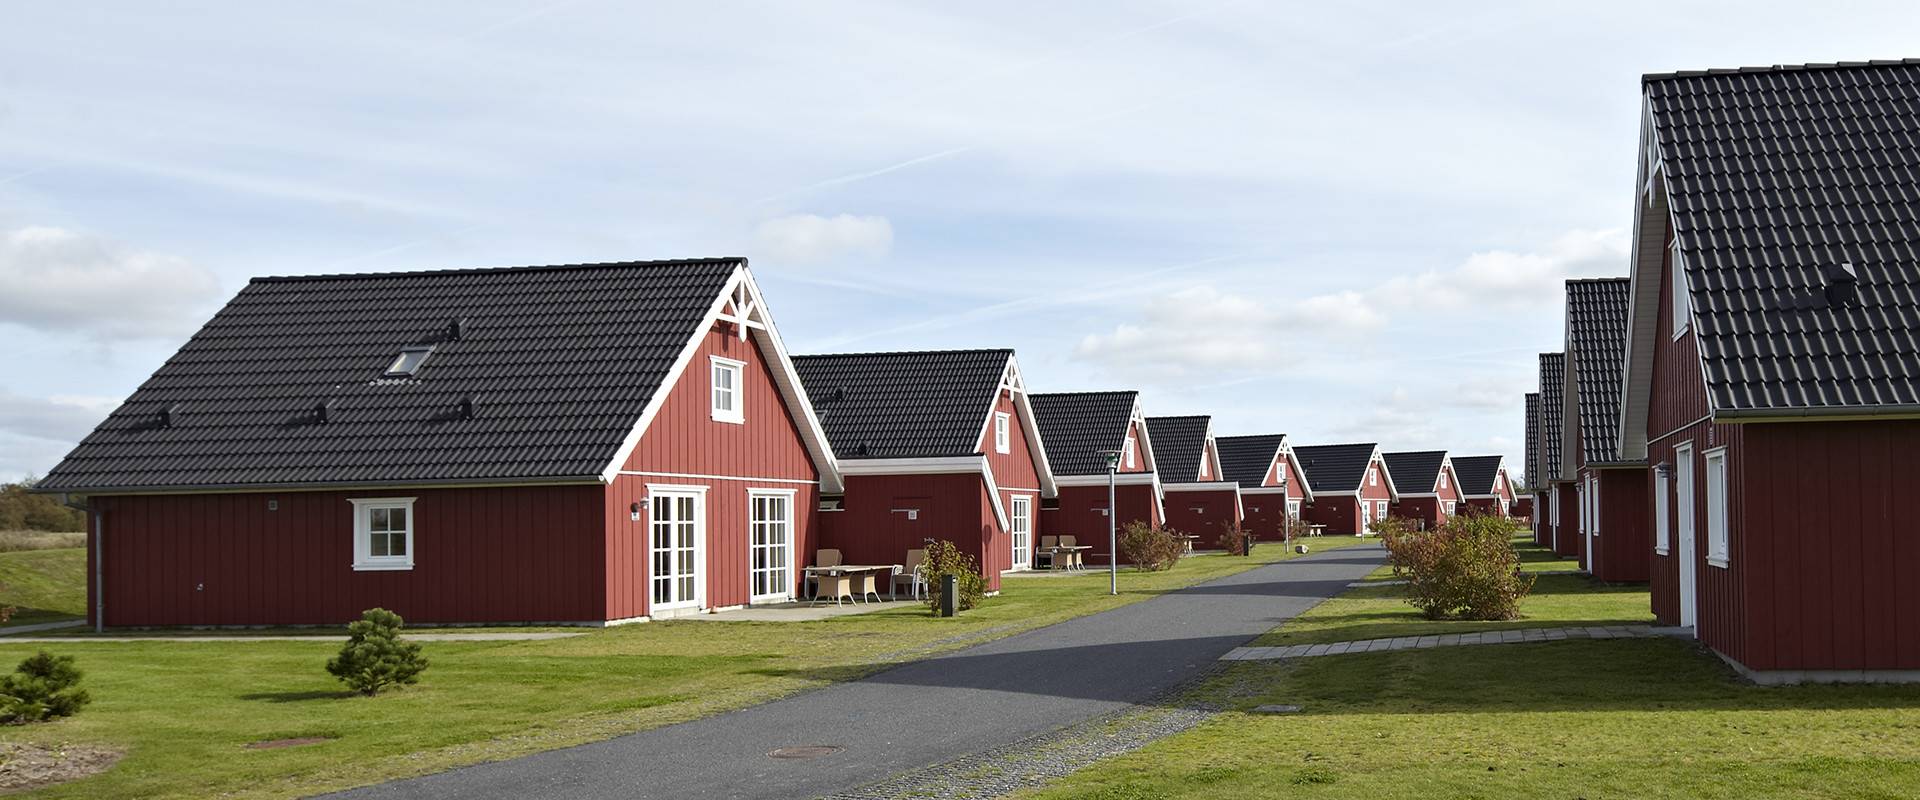 Nordic Plus 8 holiday home Lalandia in Billund